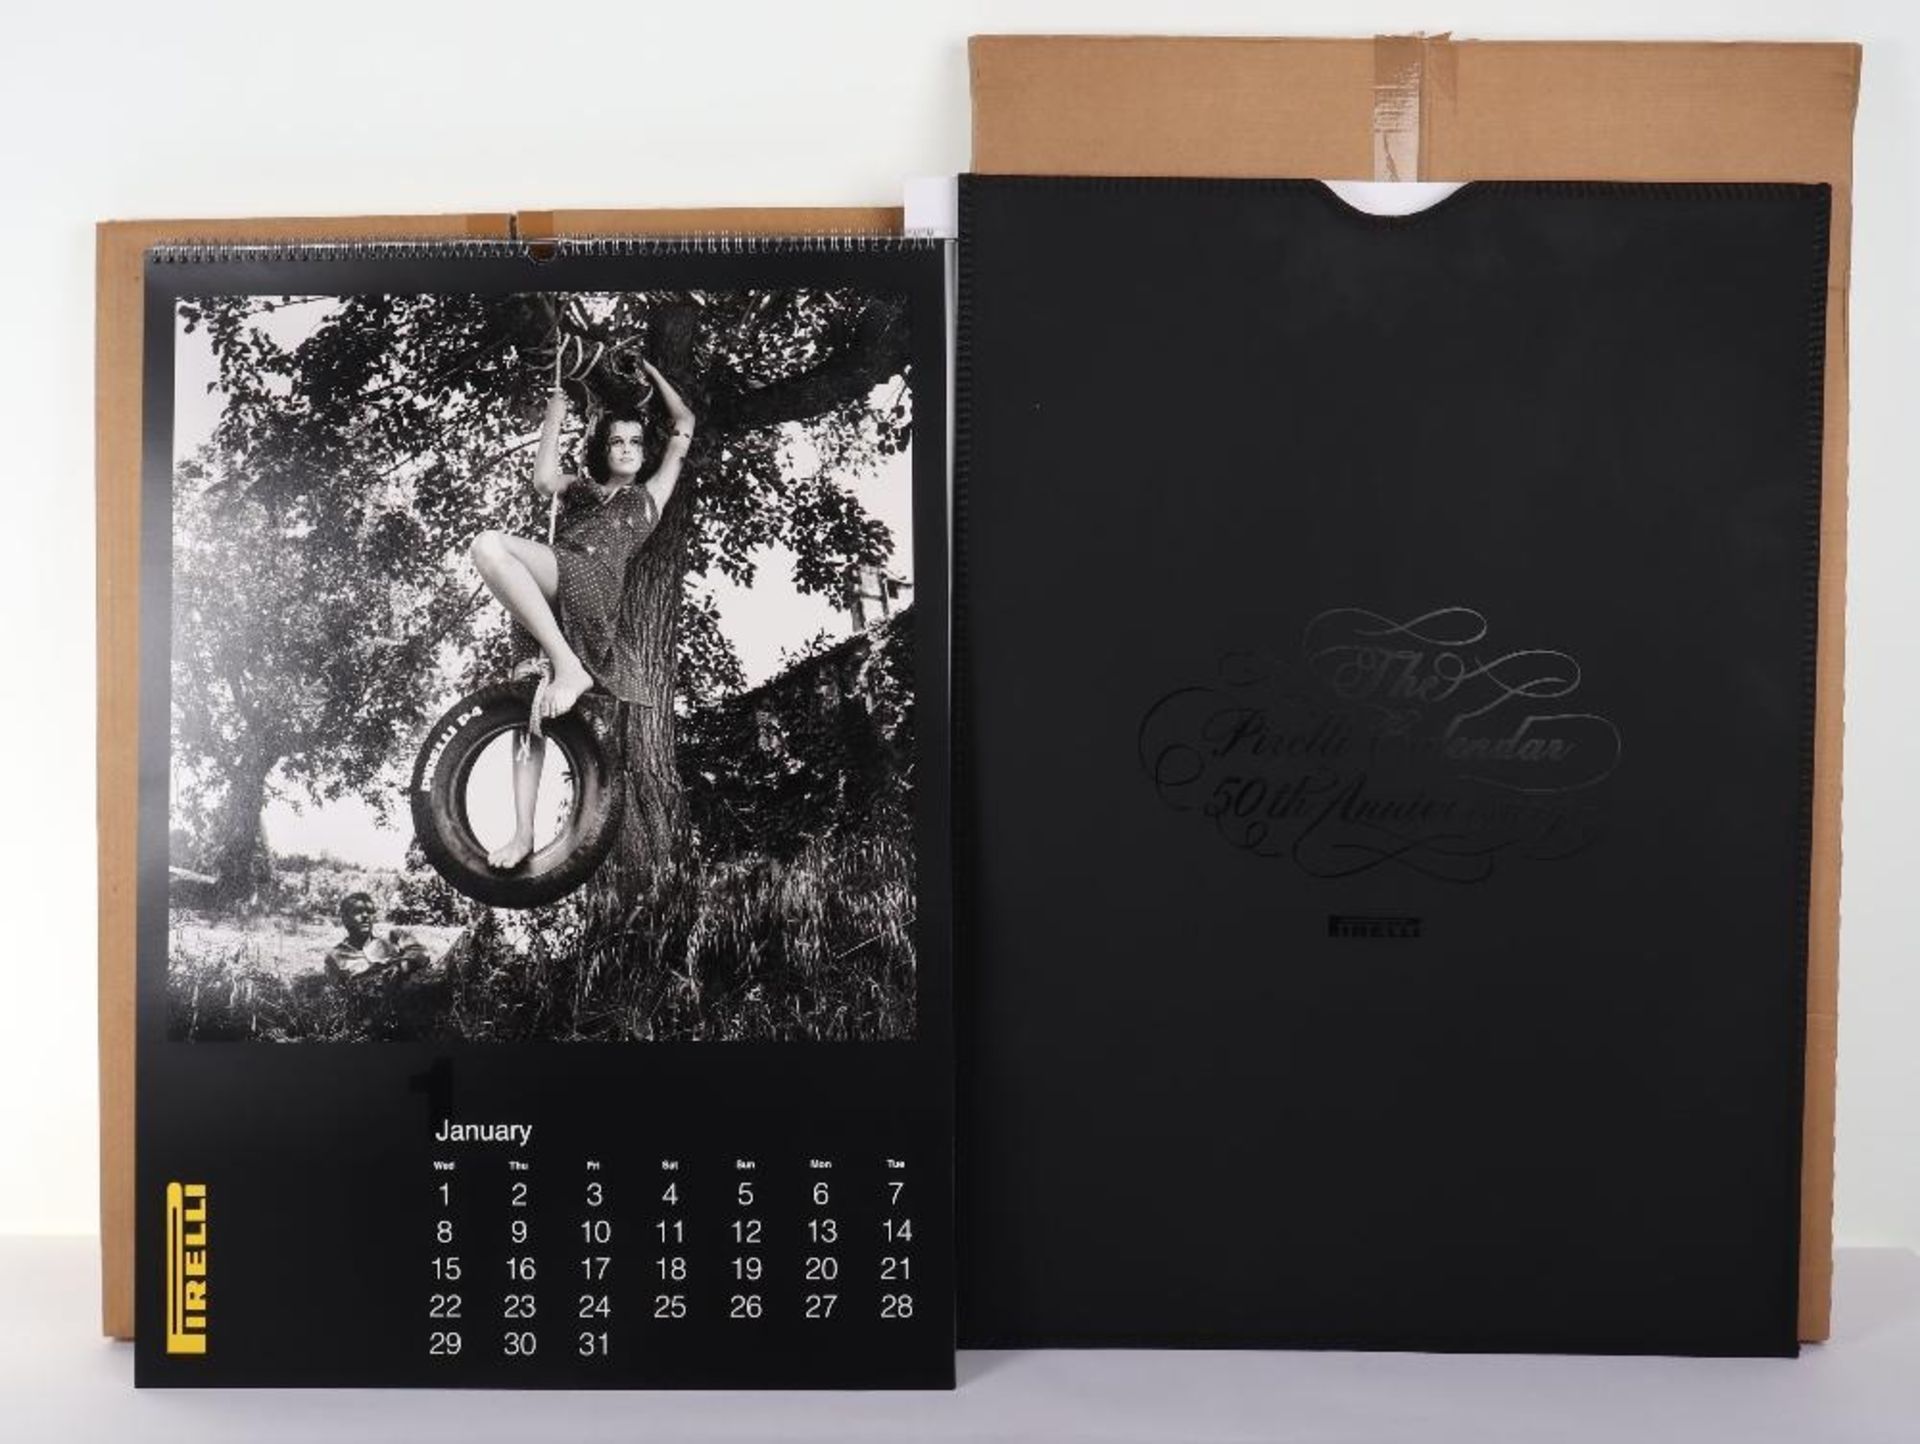 Pirelli Calendar 2011 Mythology Carl Lagerfield and 2014 50th Anniversary 1986 photographer Helmet N - Image 2 of 2